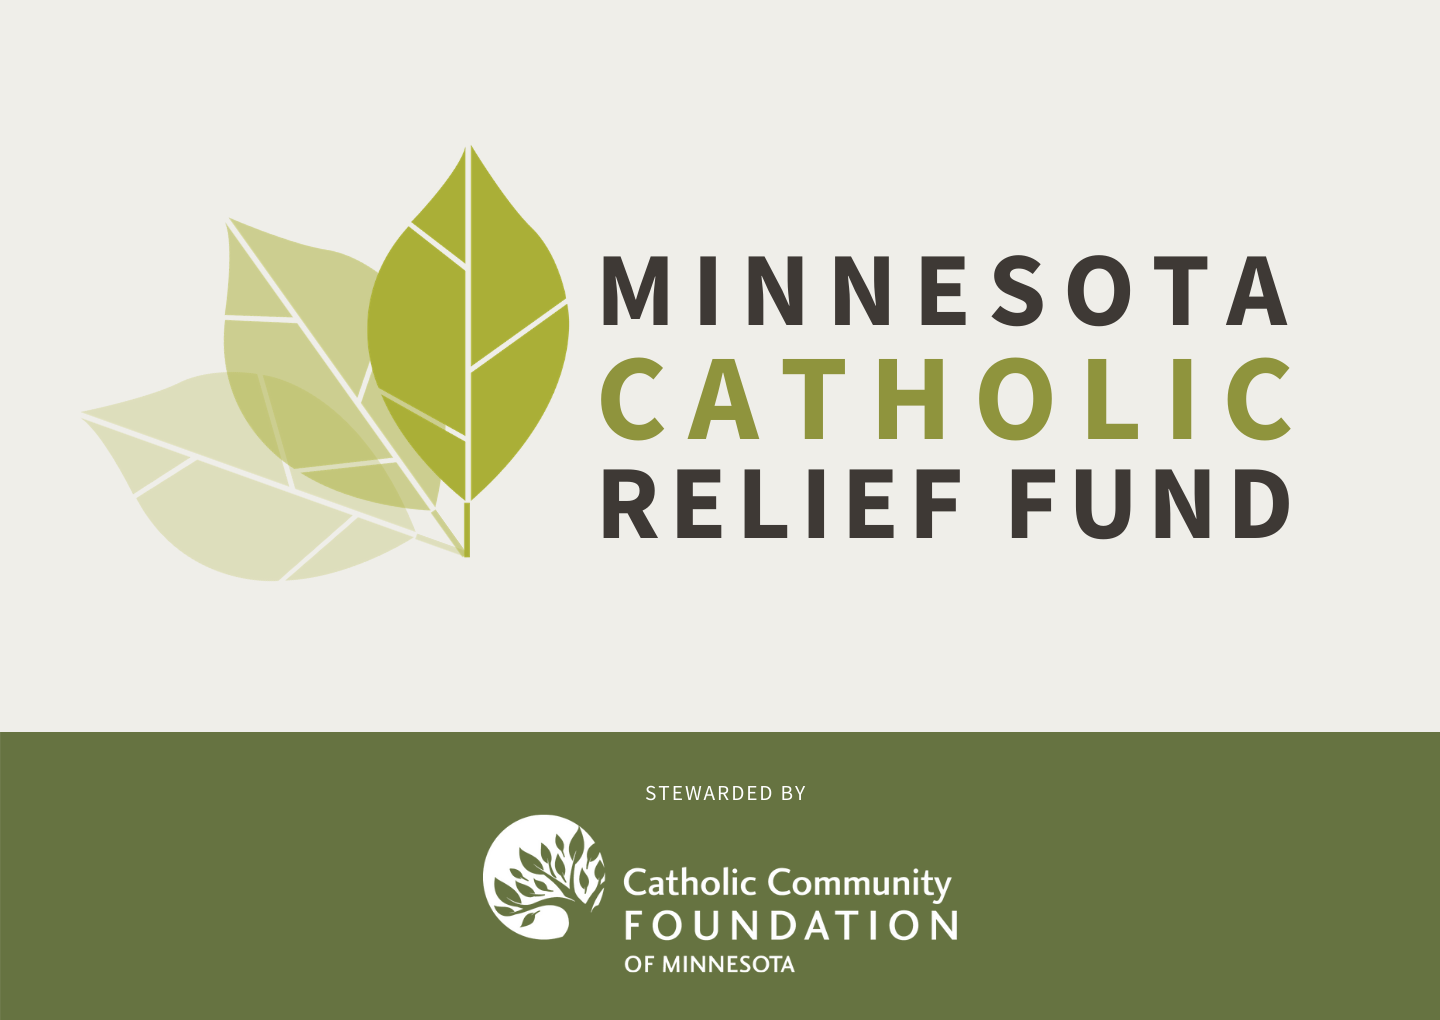 Introducing the Minnesota Catholic Relief Fund